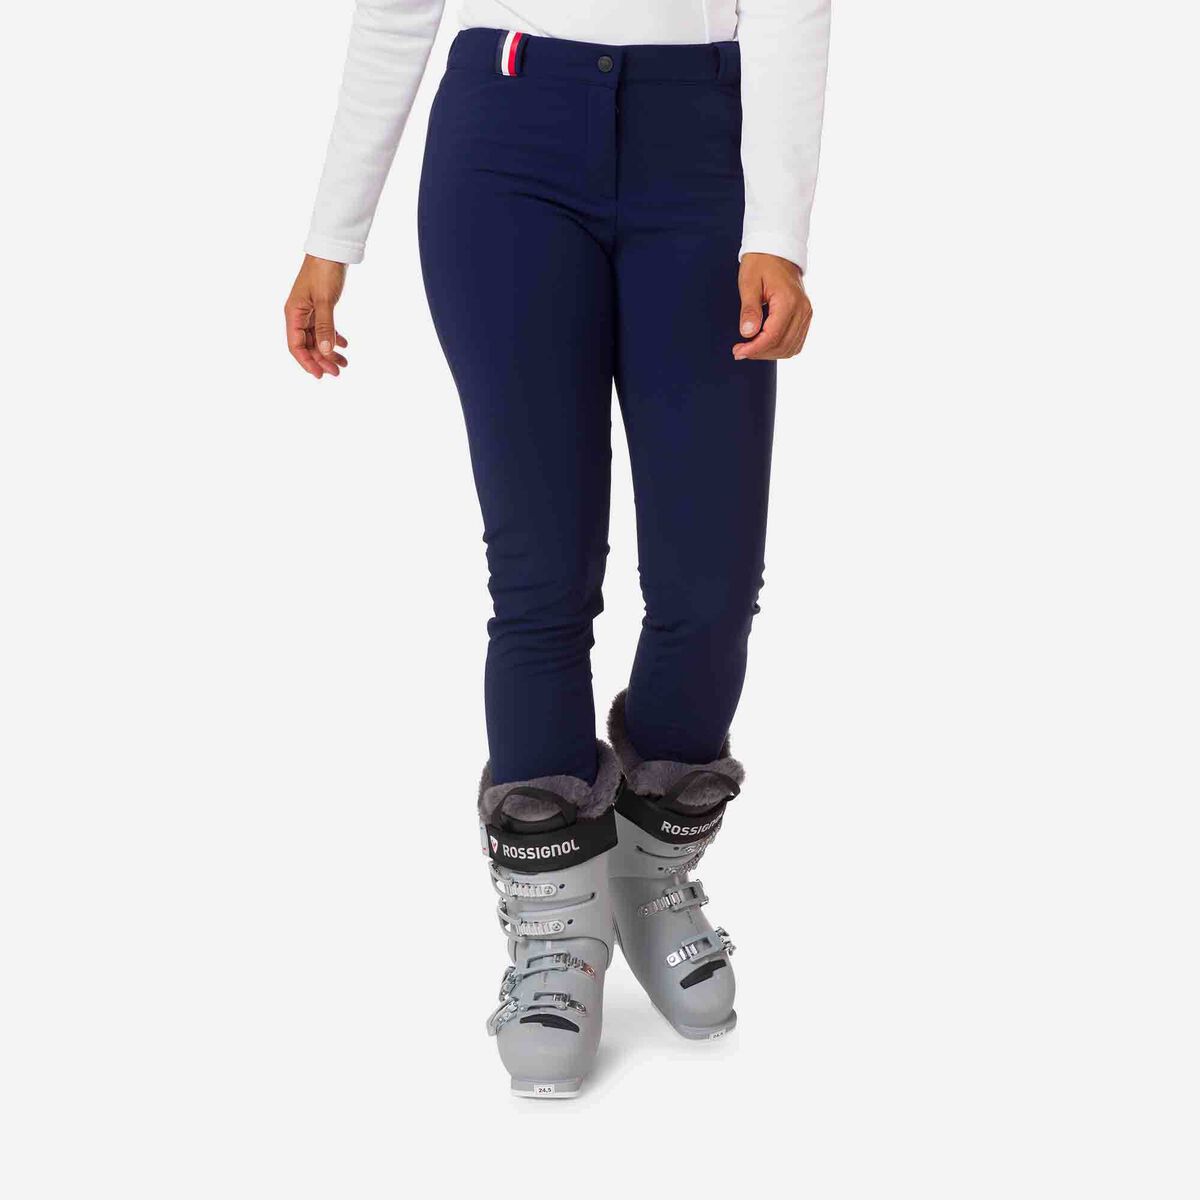 Pantalons de ski femme